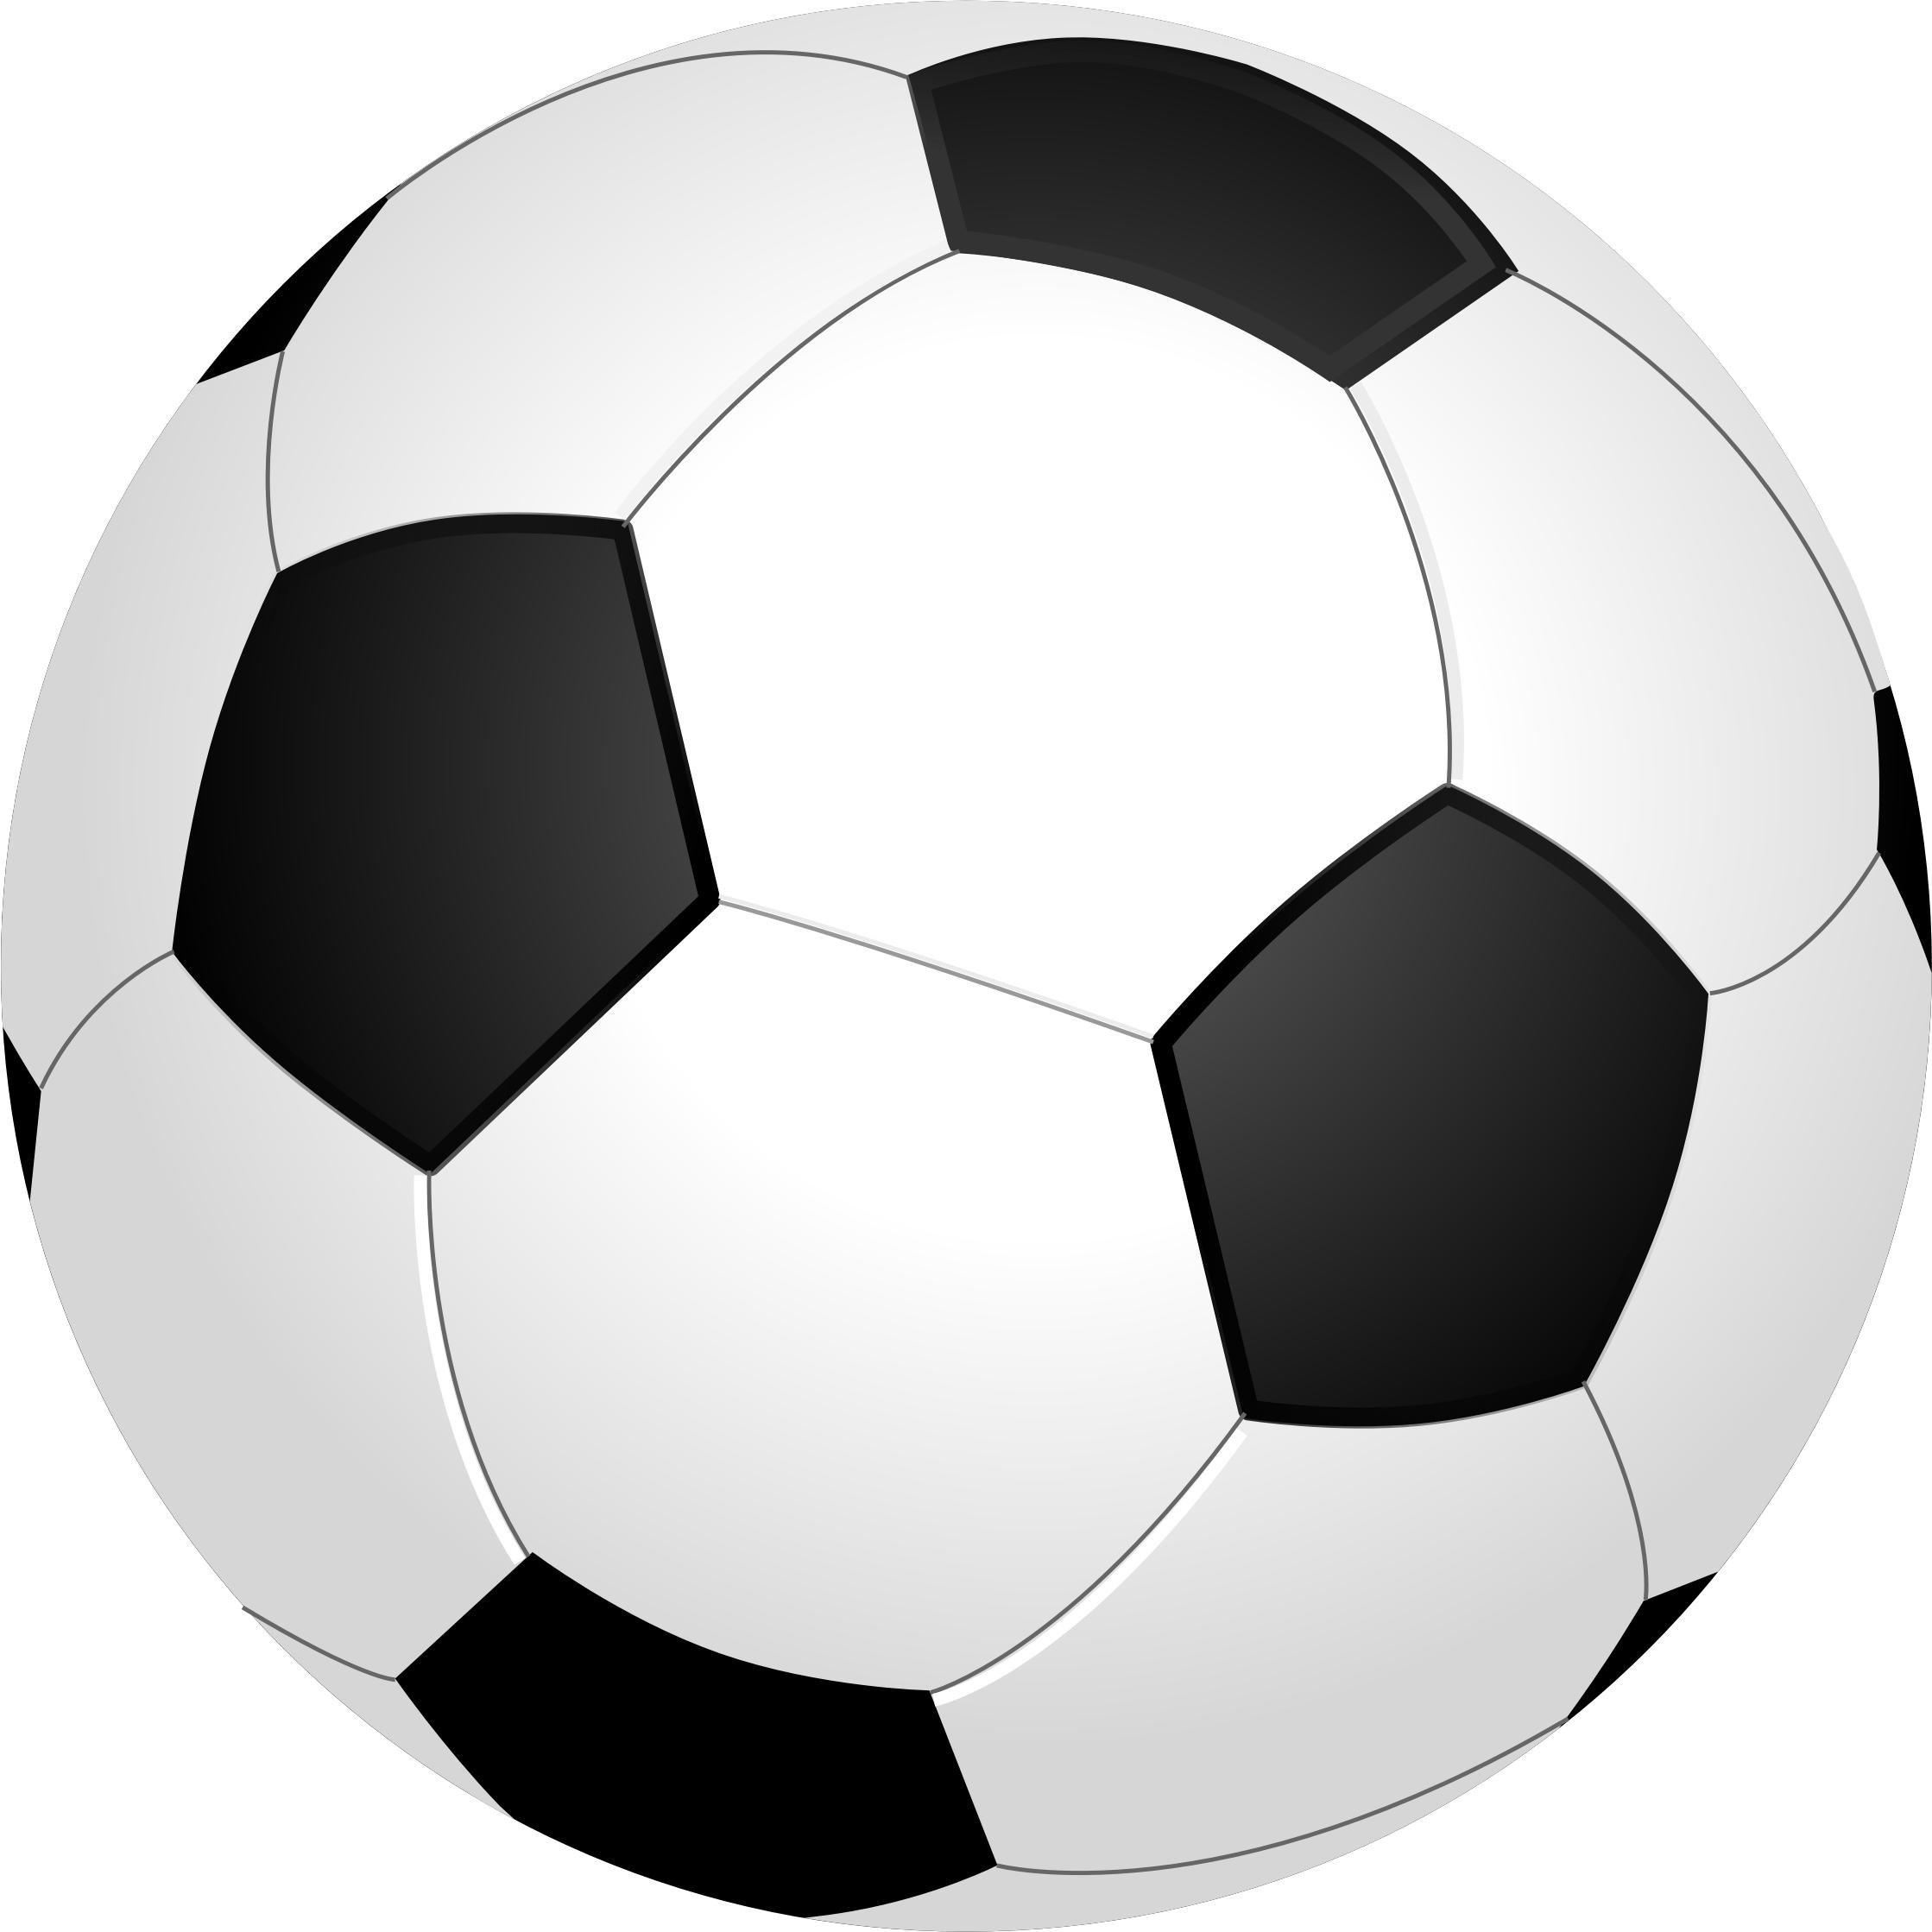 Soccerball noShadow png